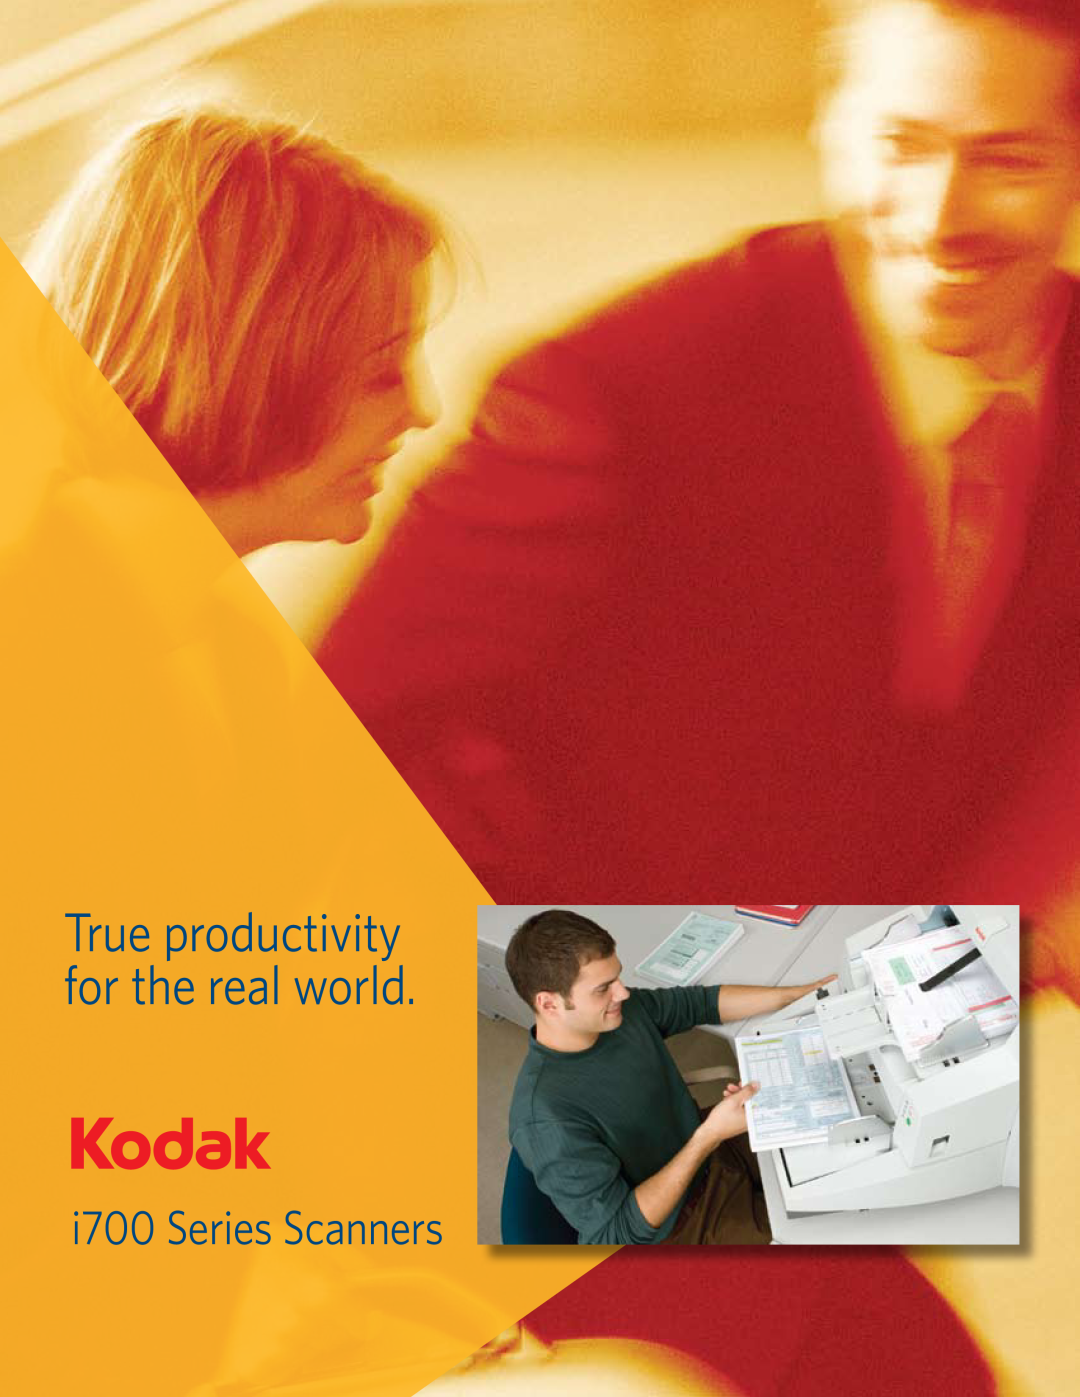 Kodak I700 manual i700 Series Scanners, True productivity for the real world 